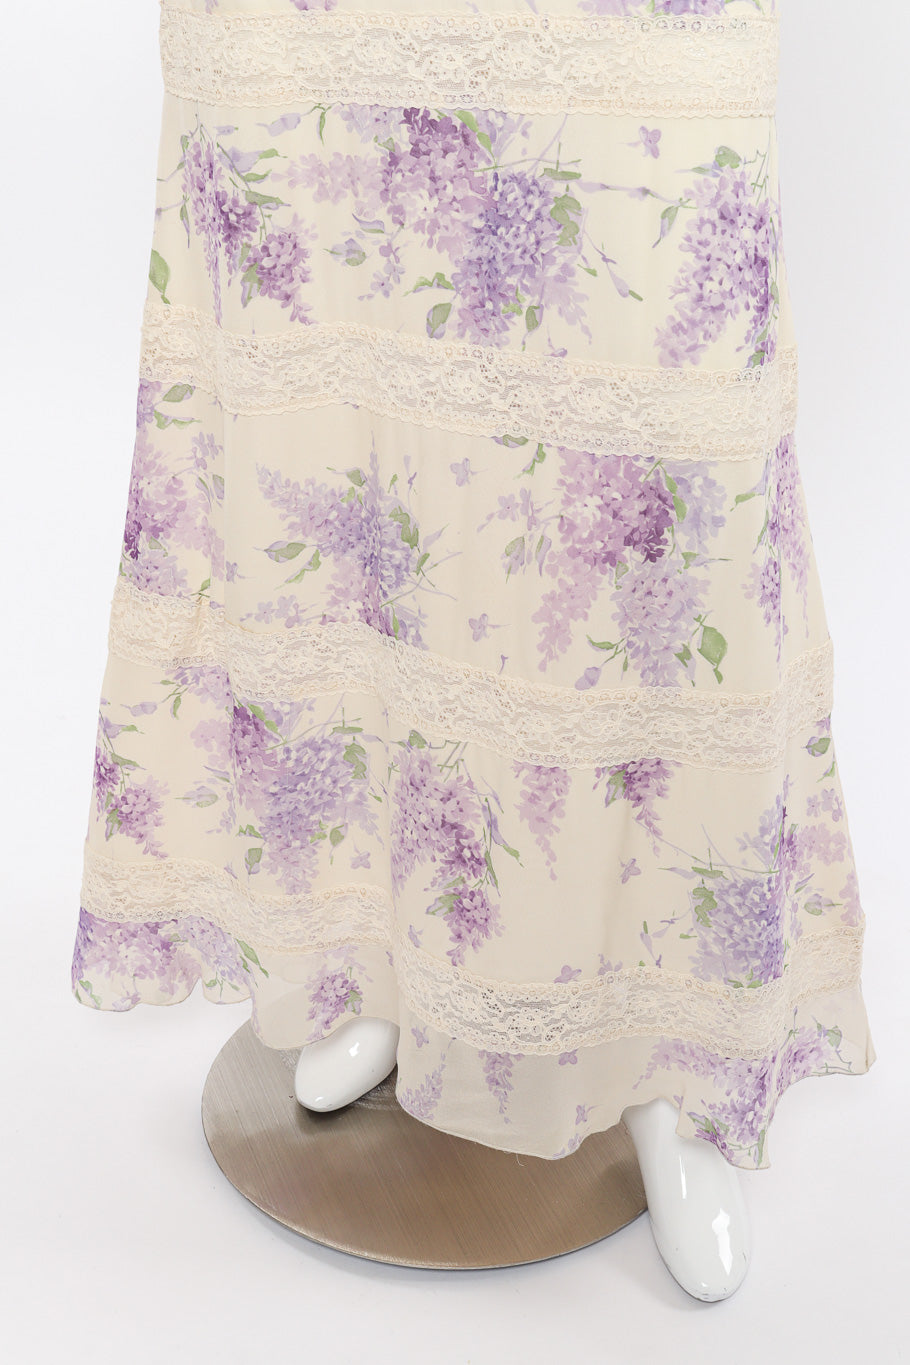 Vintage Valentino Floral Lace Maxi Dress bottom hem closeup @Recessla